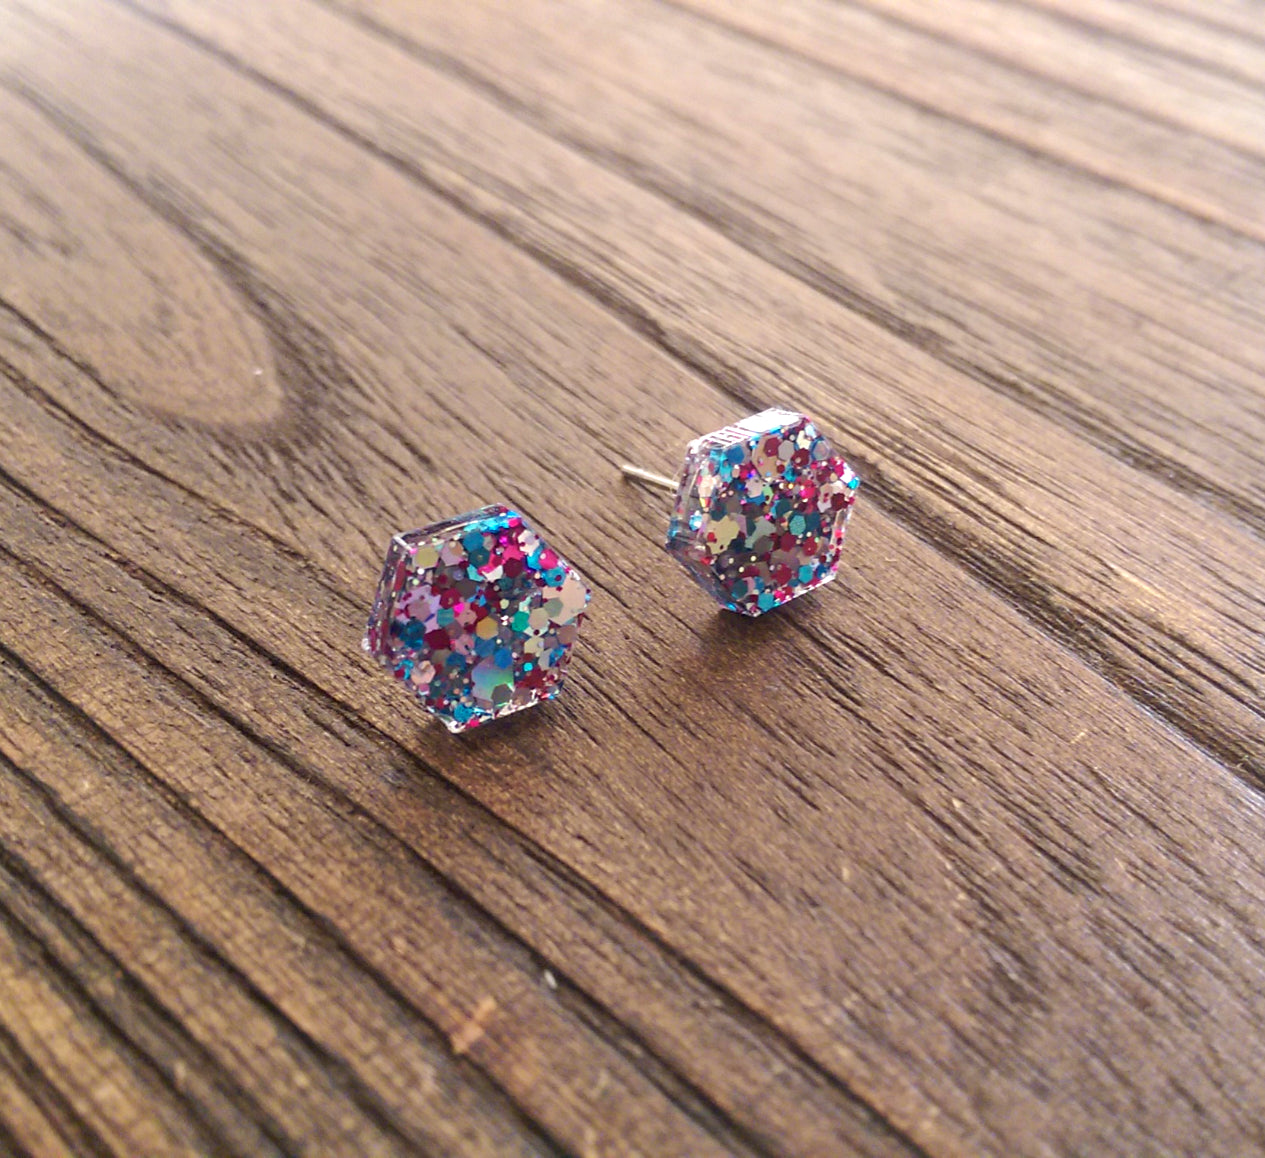 Hexagon Resin Stud Earrings, Mixed Glitter Earrings. Stainless Steel Stud Earrings. 10mm - Silver and Resin Designs